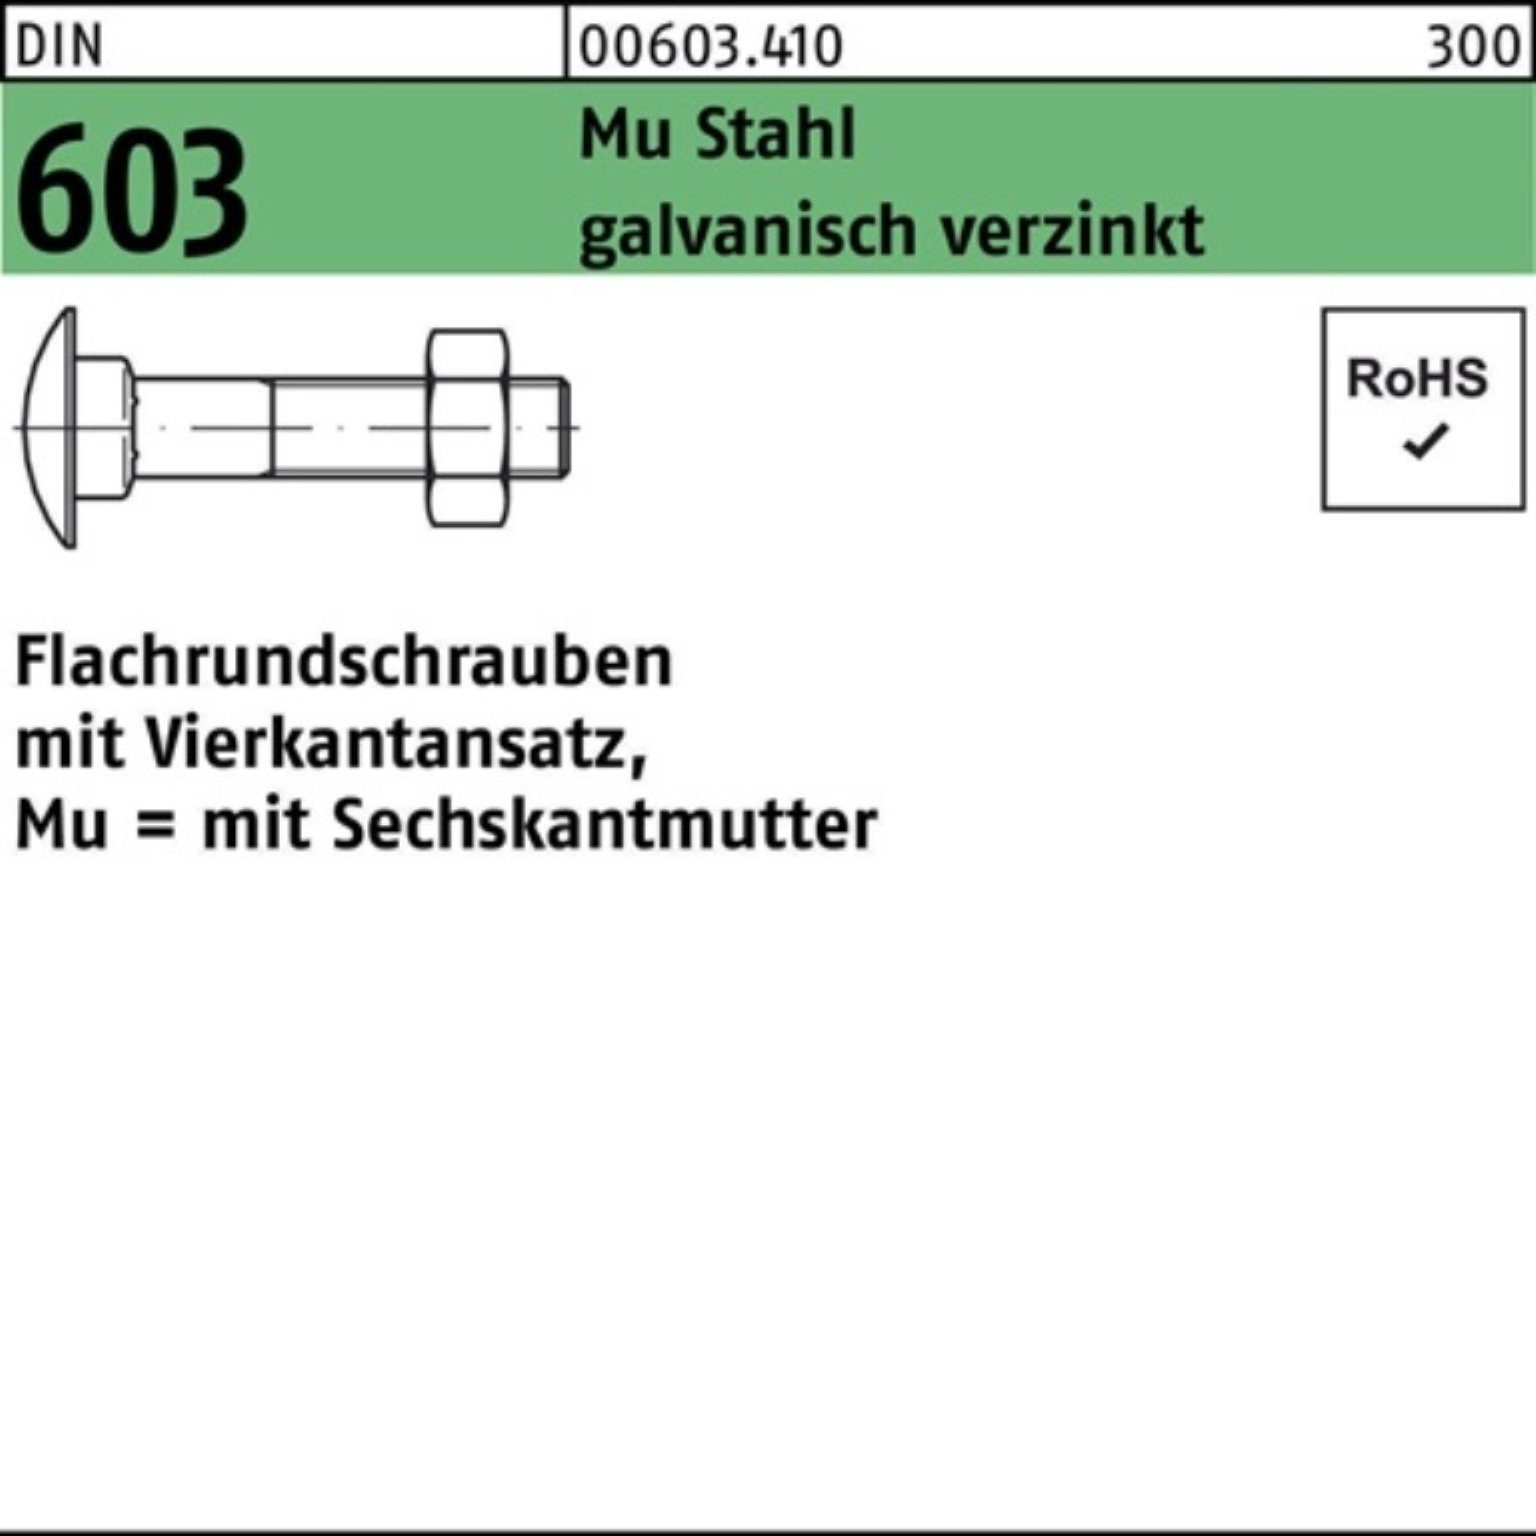 Reyher Schraube 200er Pack Flachrundschraube DIN 603 Vierkantansatz/6-ktmutter M6x80 M